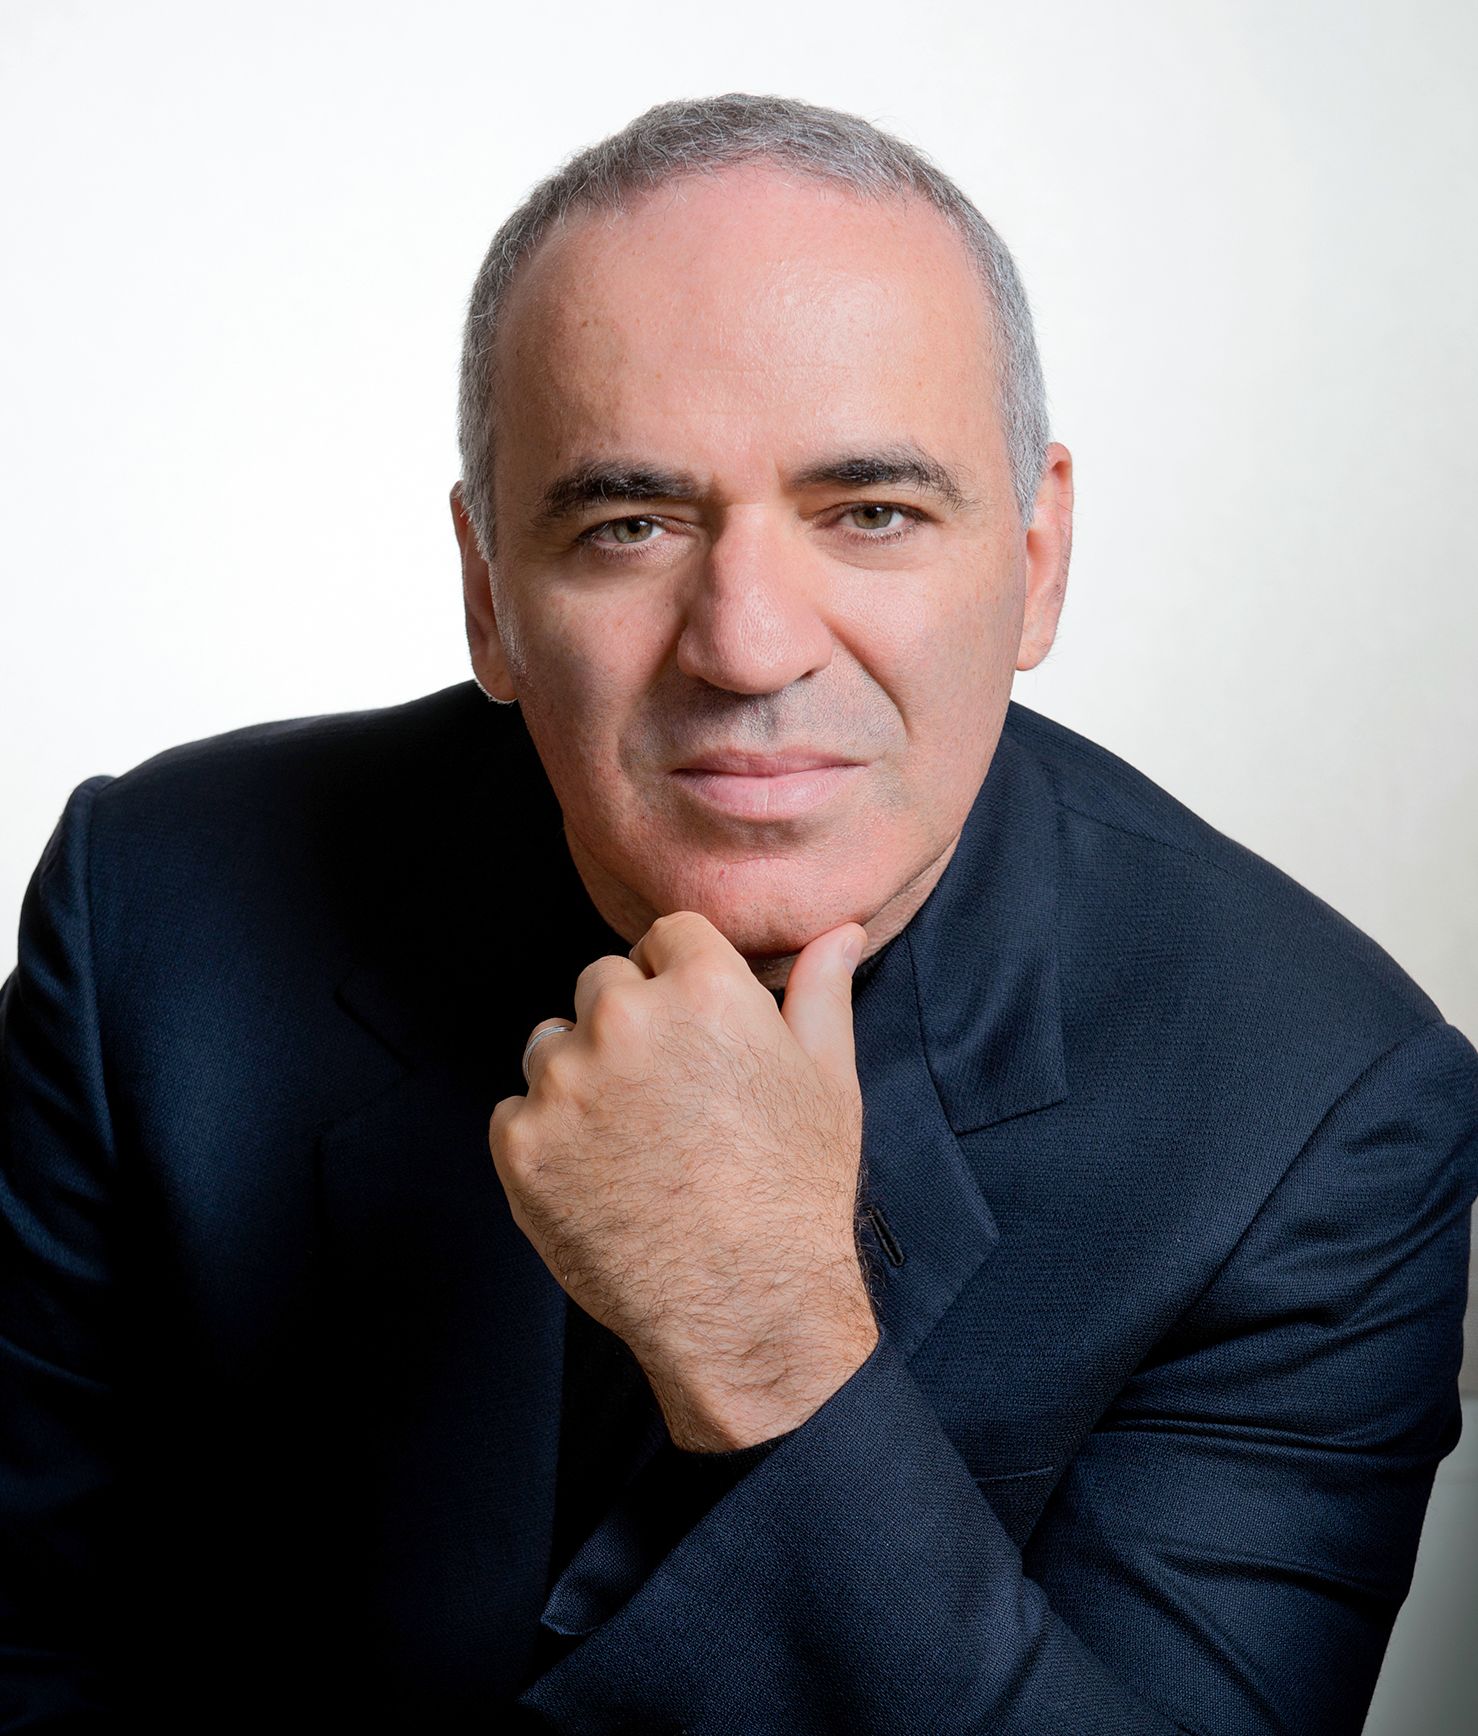 NCPF: Gary Kasparovs visit to Nigeria.